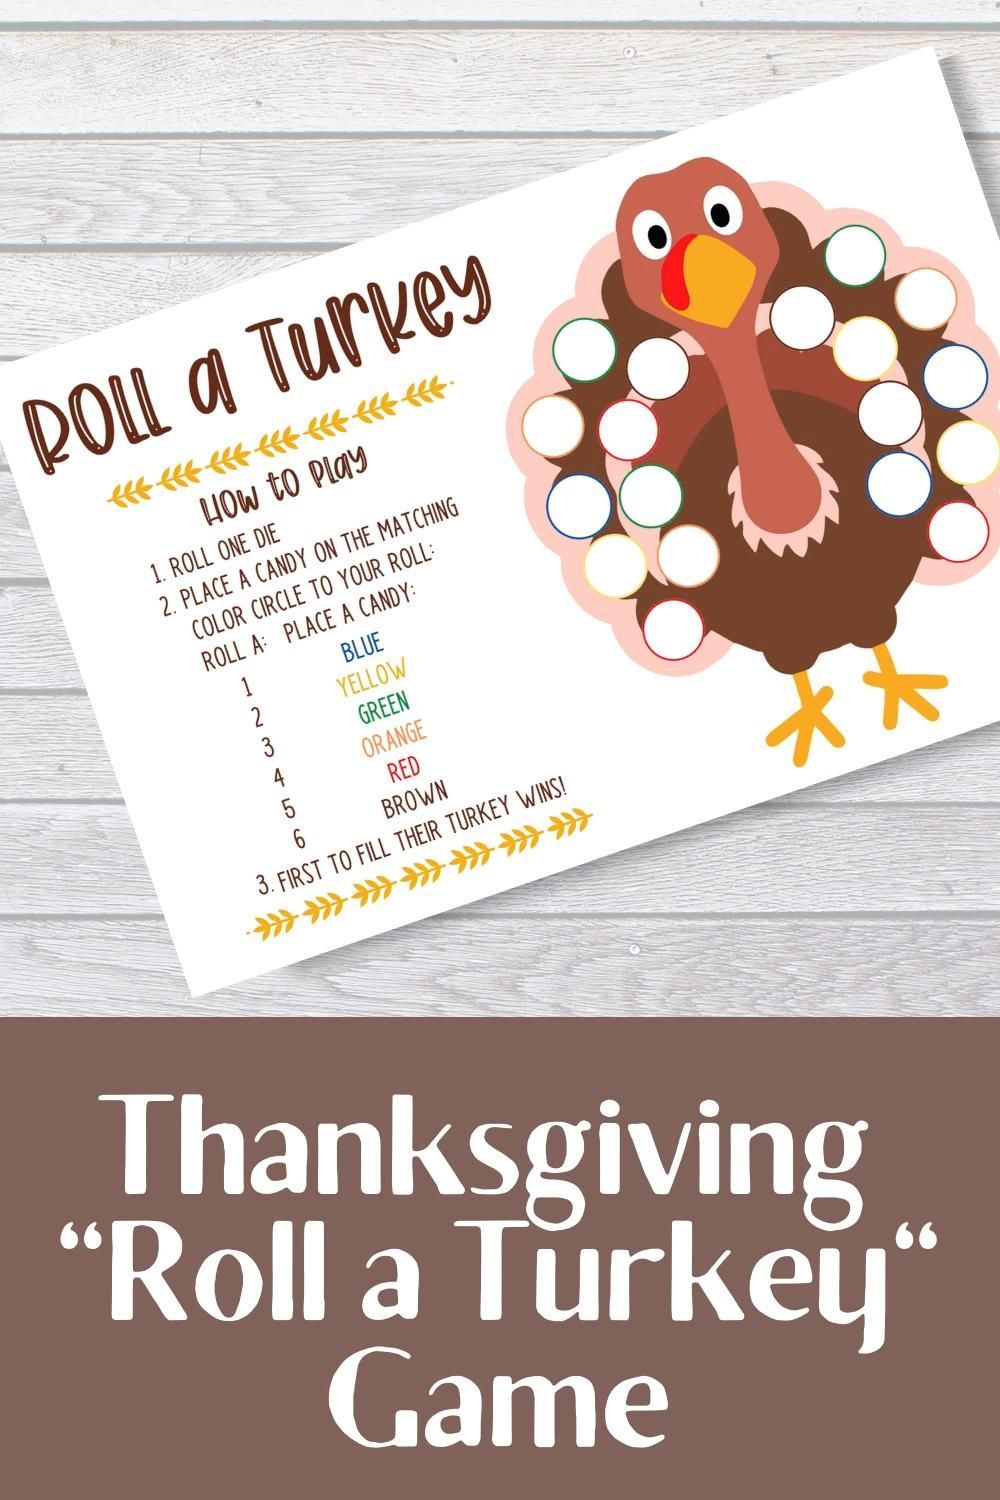 Roll a Turkey Thanksgiving Kids Game -   17 diy thanksgiving centerpieces for kids ideas